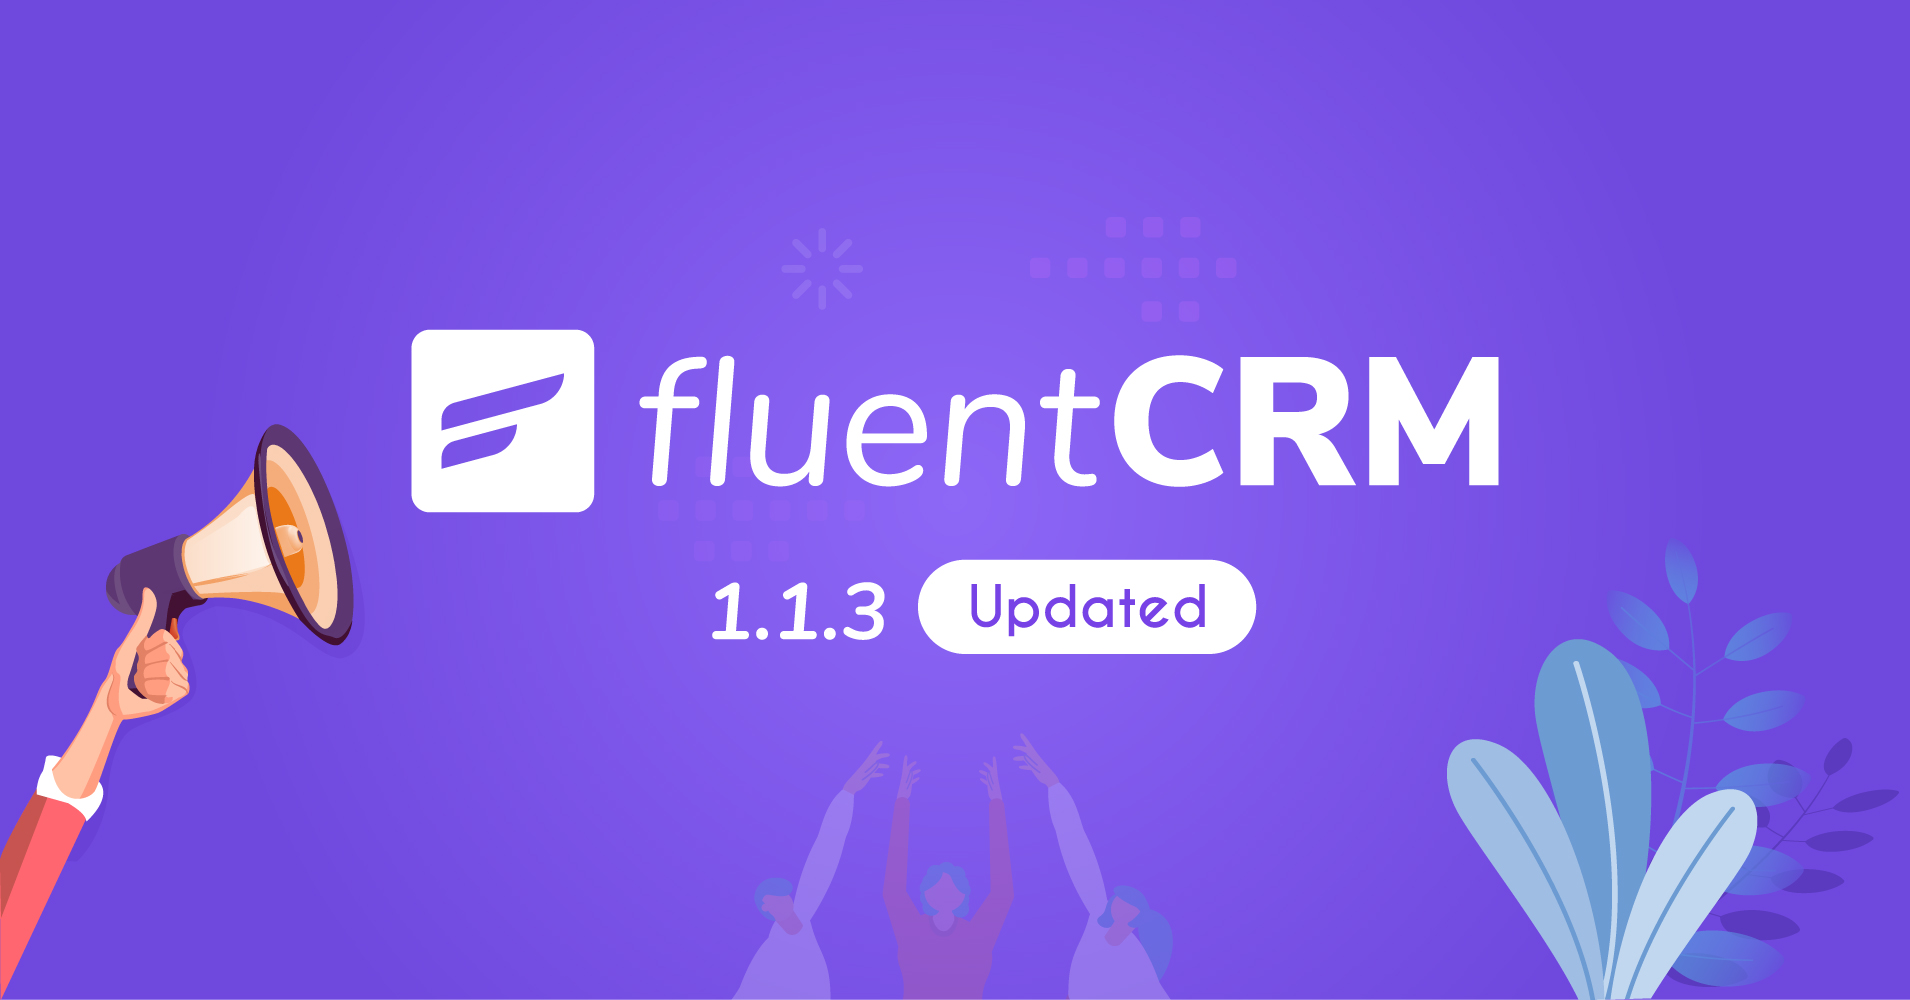 FluentCRM 1.1.3 release note